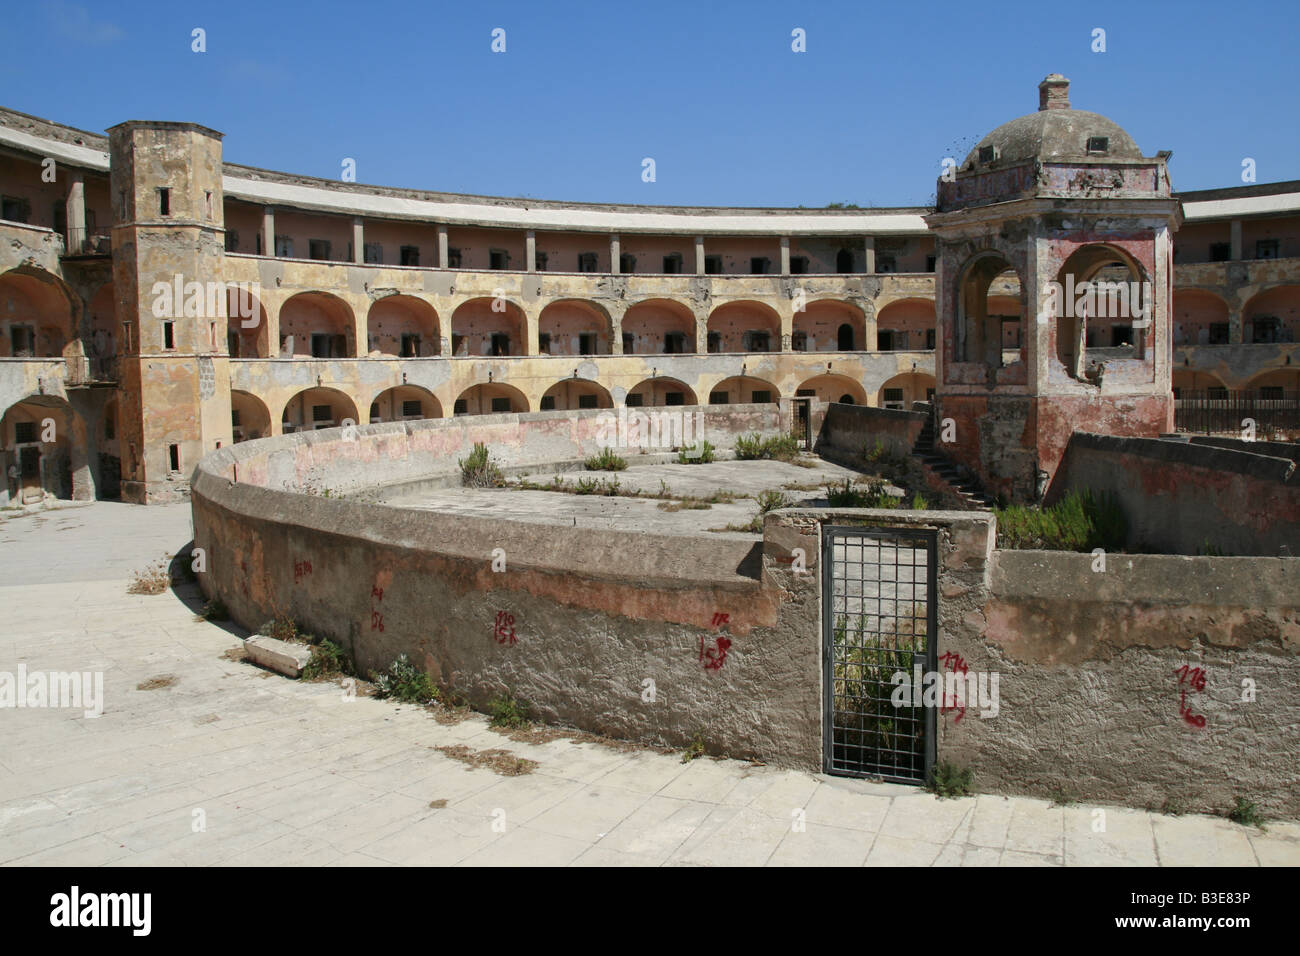 old bourbon prison on santo stefano island, italy Stock Photo